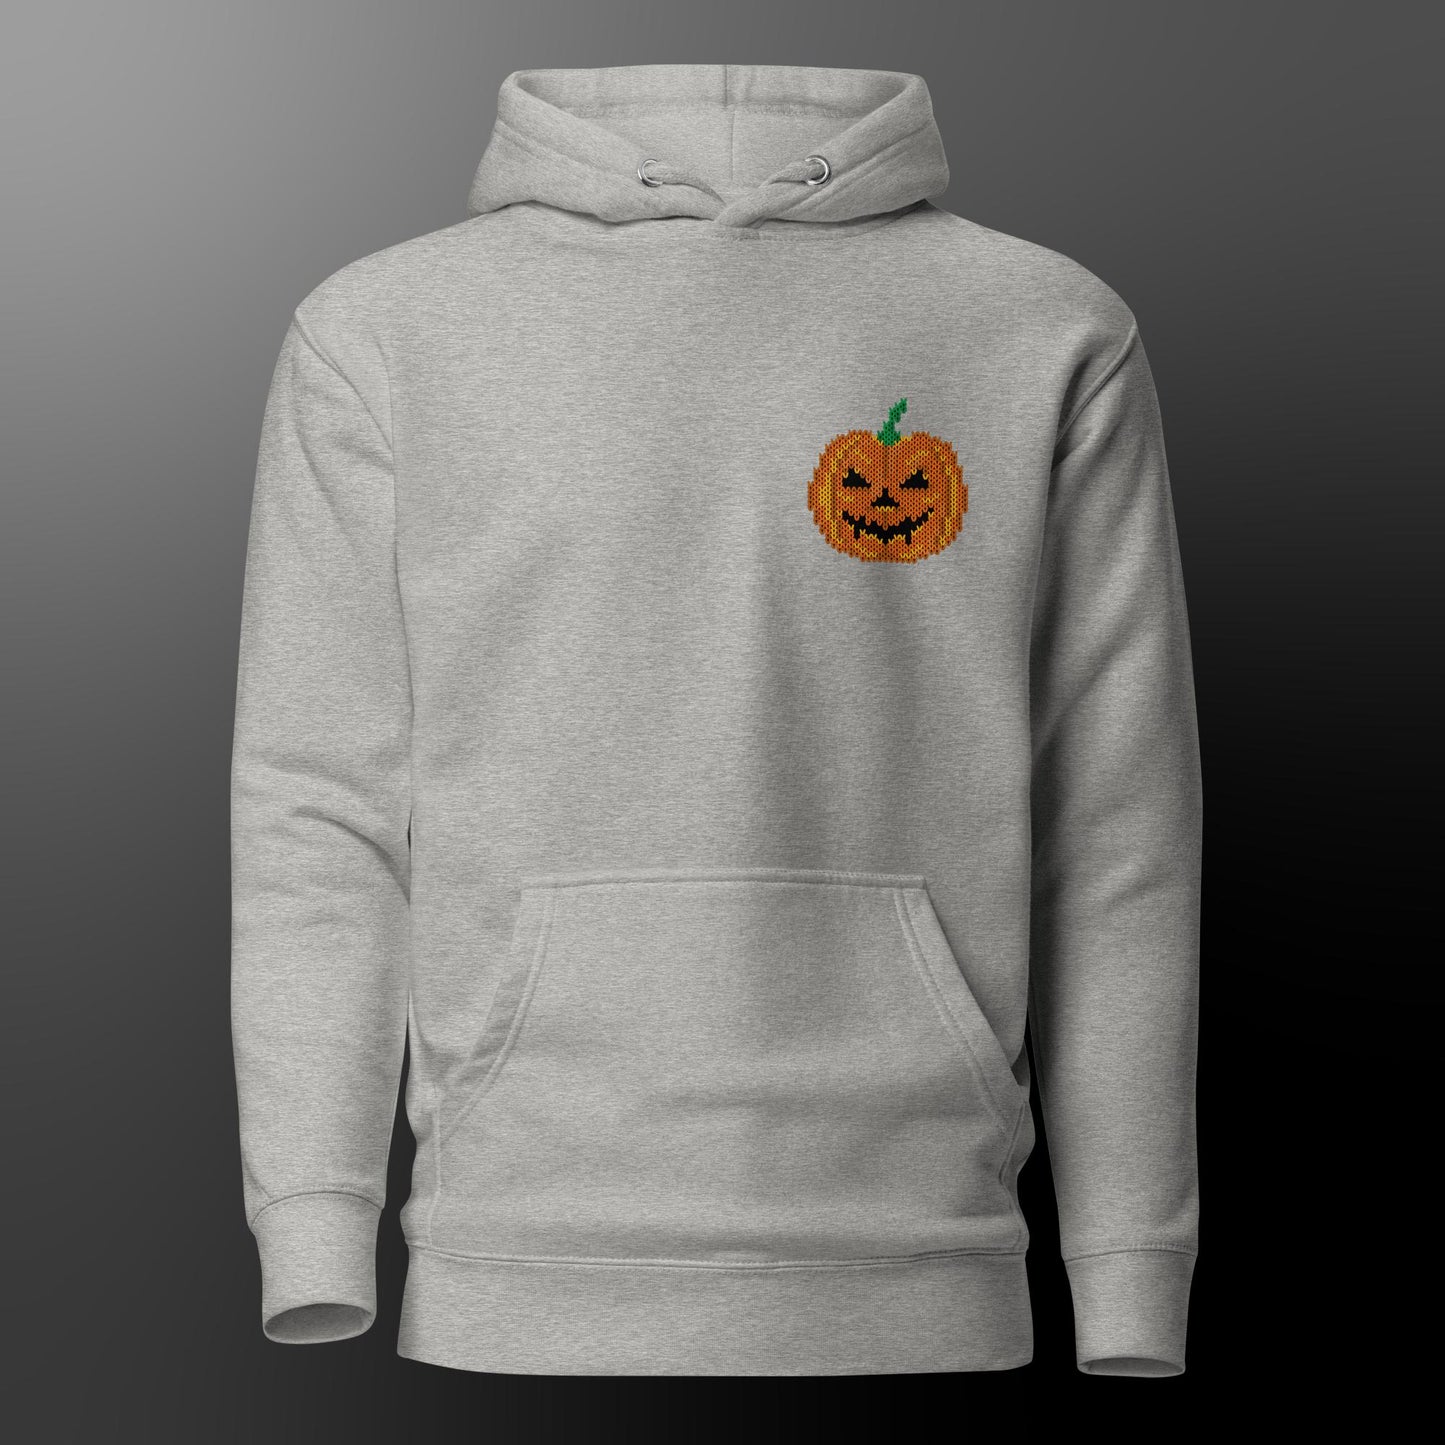 Halloween hoodie with pumpkin